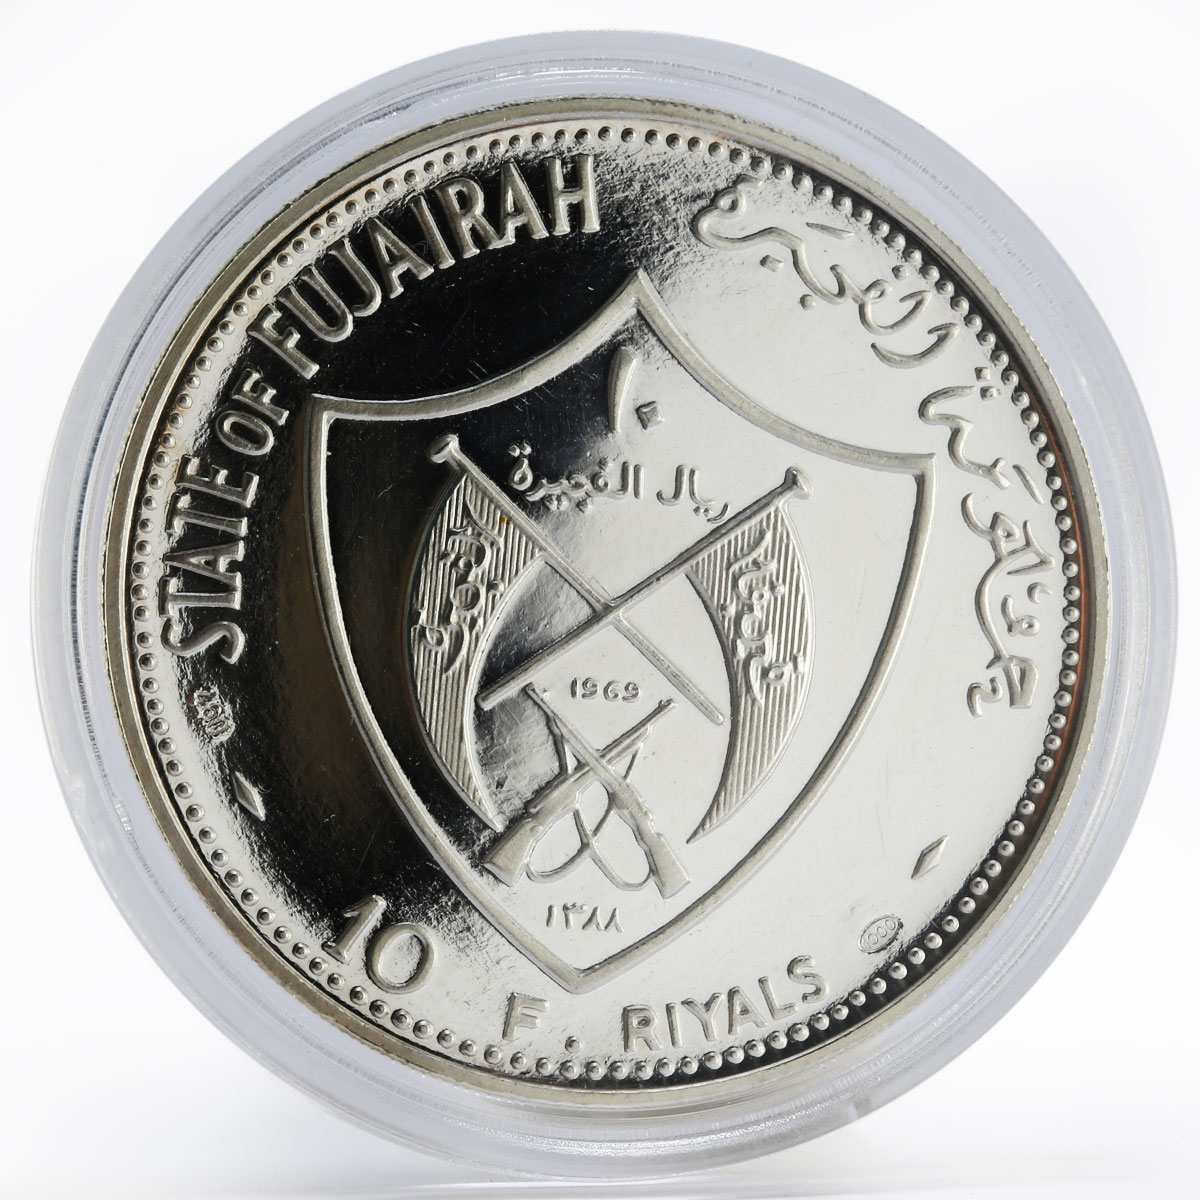 Fujairah 10 riyals Apollo XI Moon Landing Program proof silver coin 1969